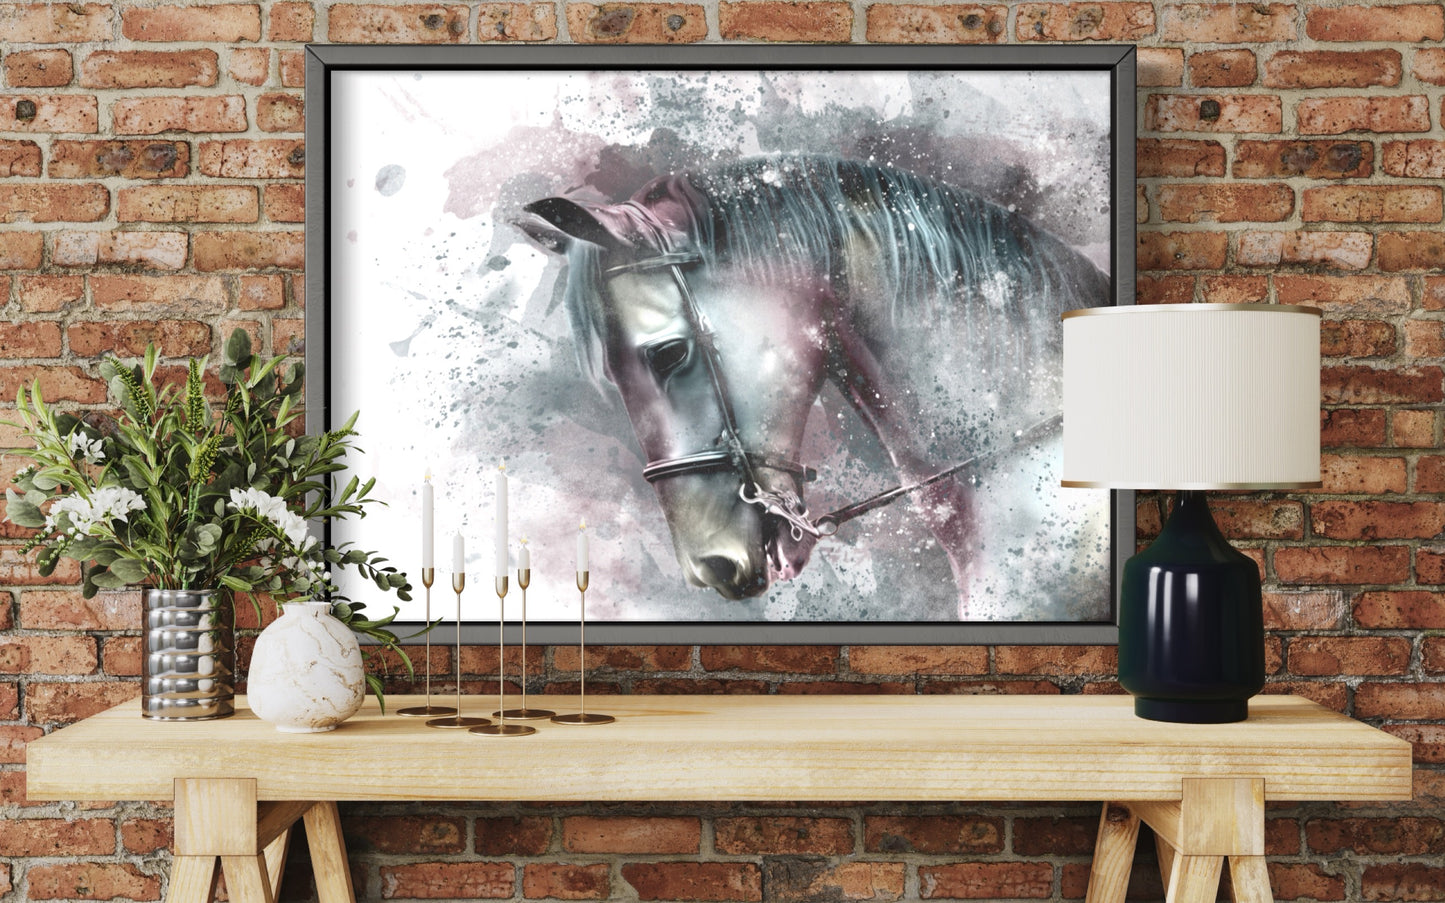 Horse Head in Profile Watercolour Effect Art Print Poster